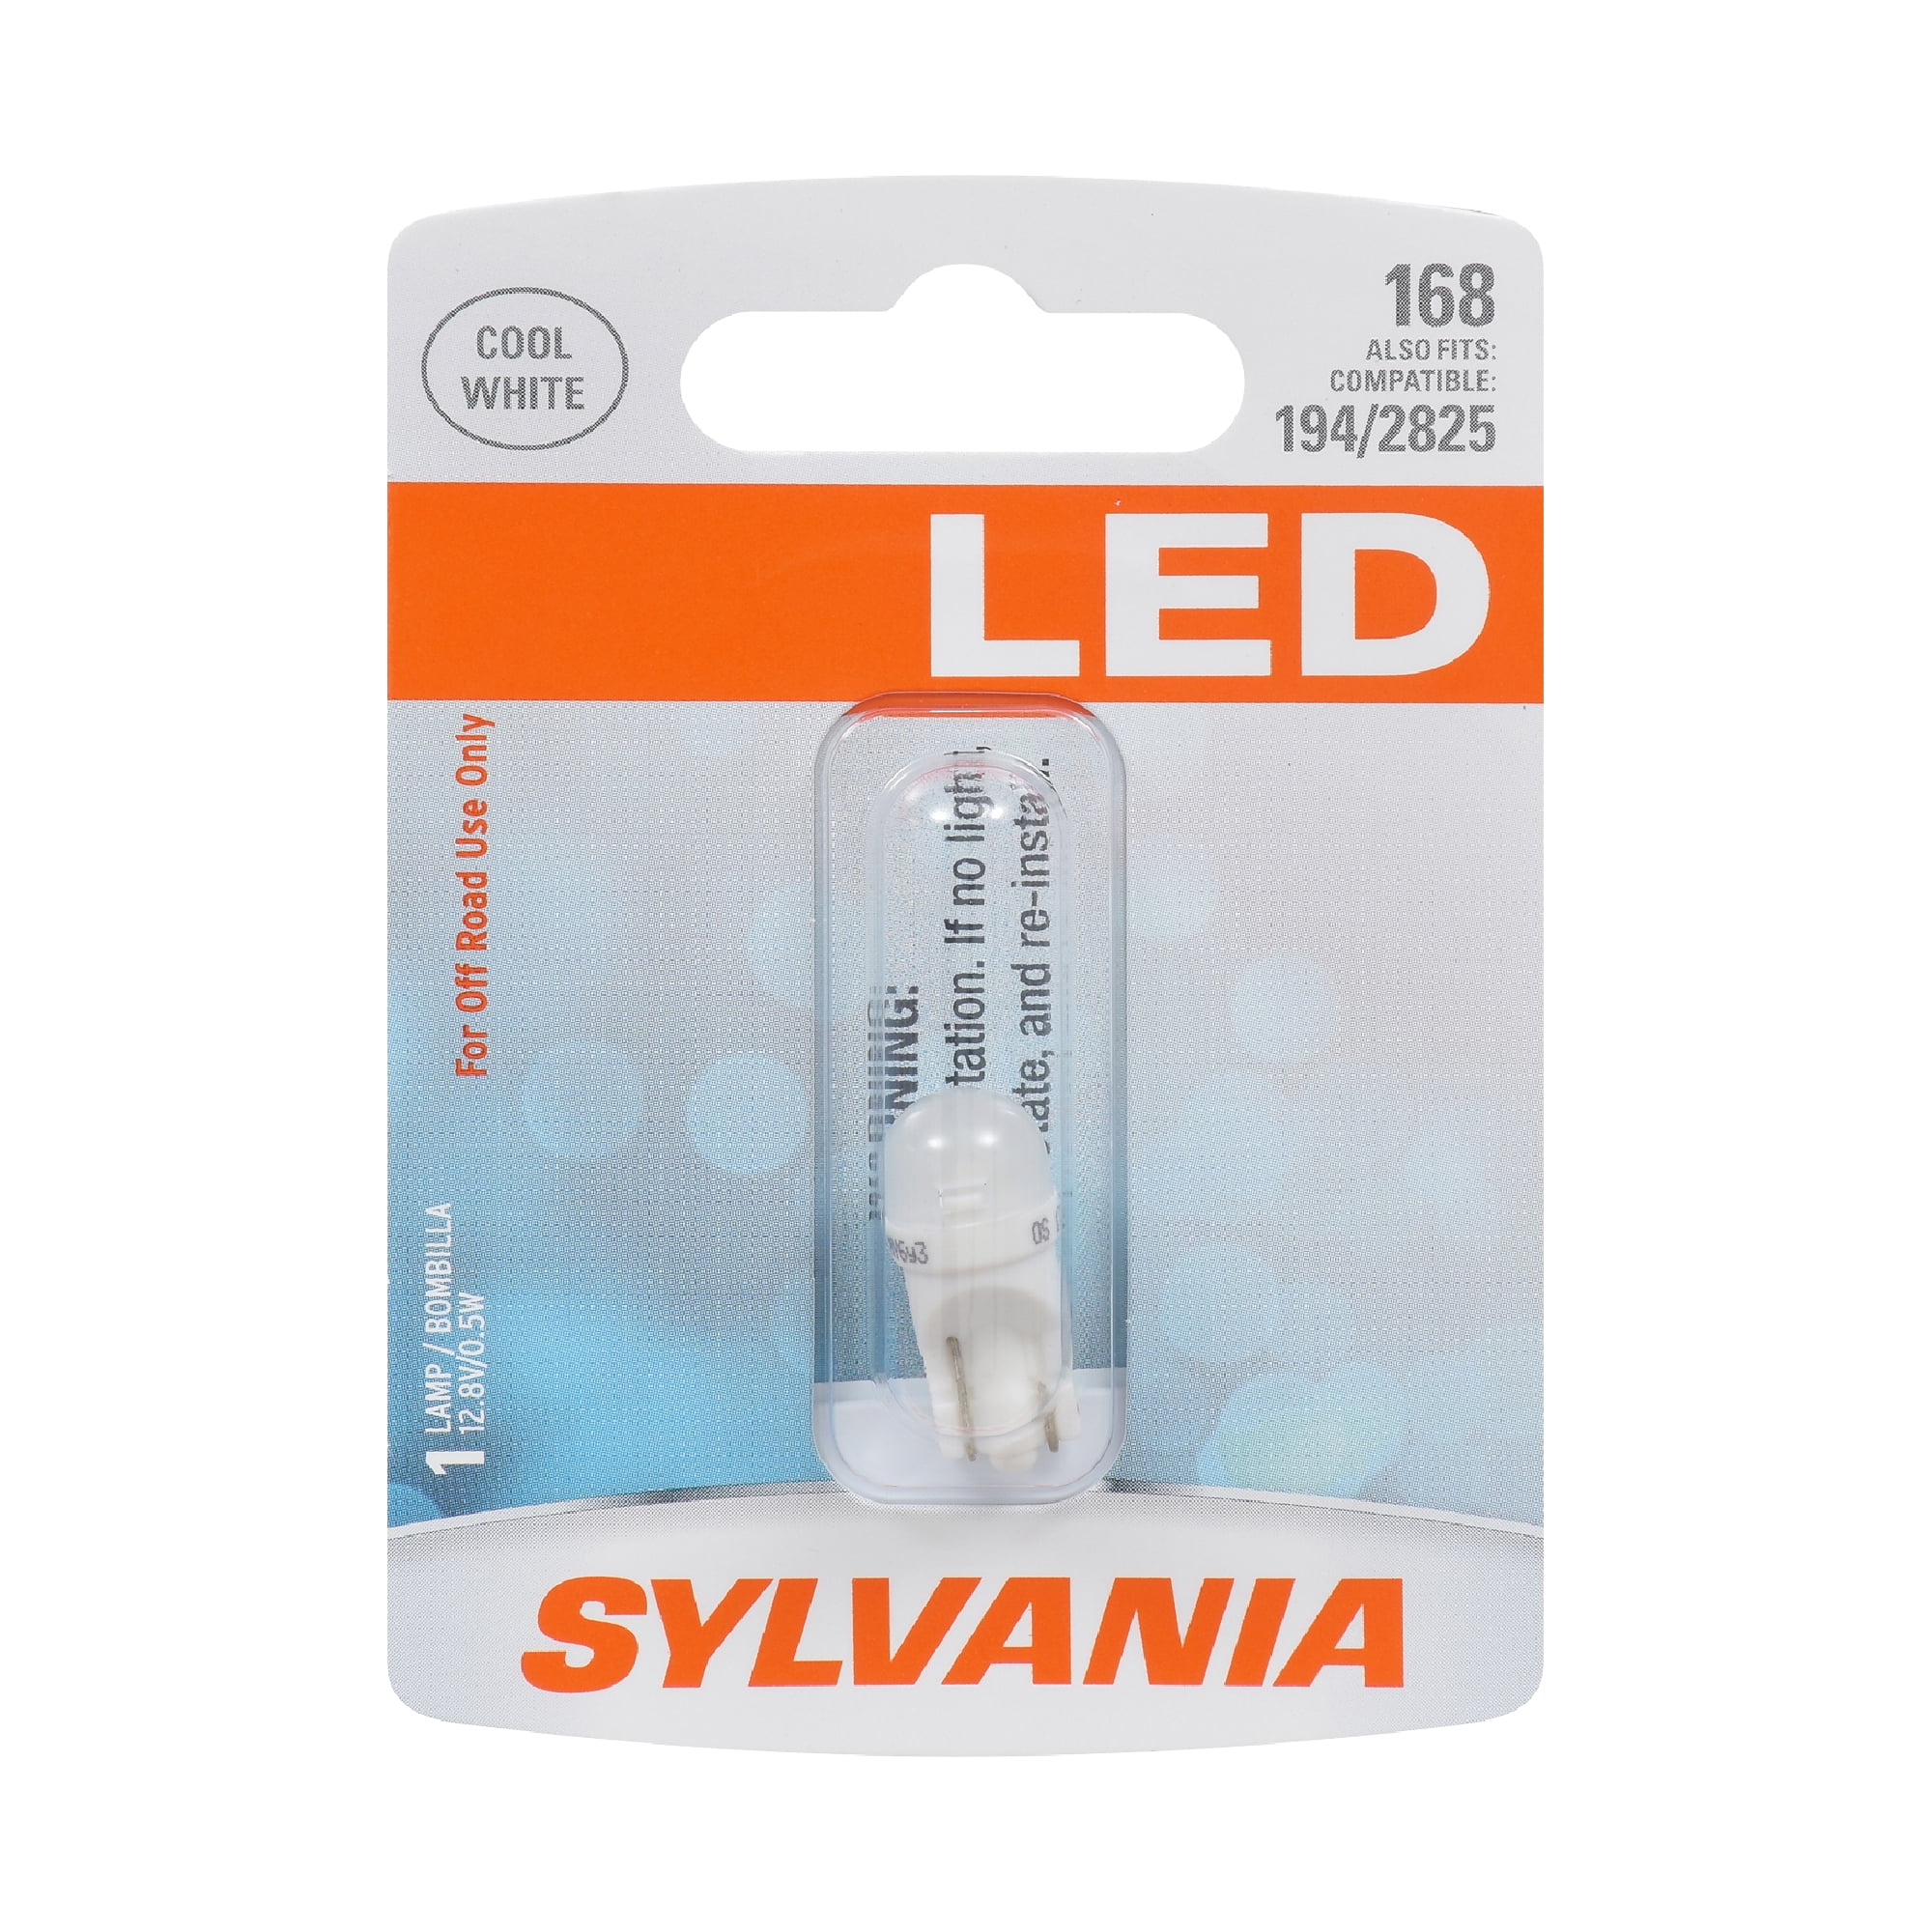 Sylvania 168 White LED Automotive Mini Bulb, Pack of 1